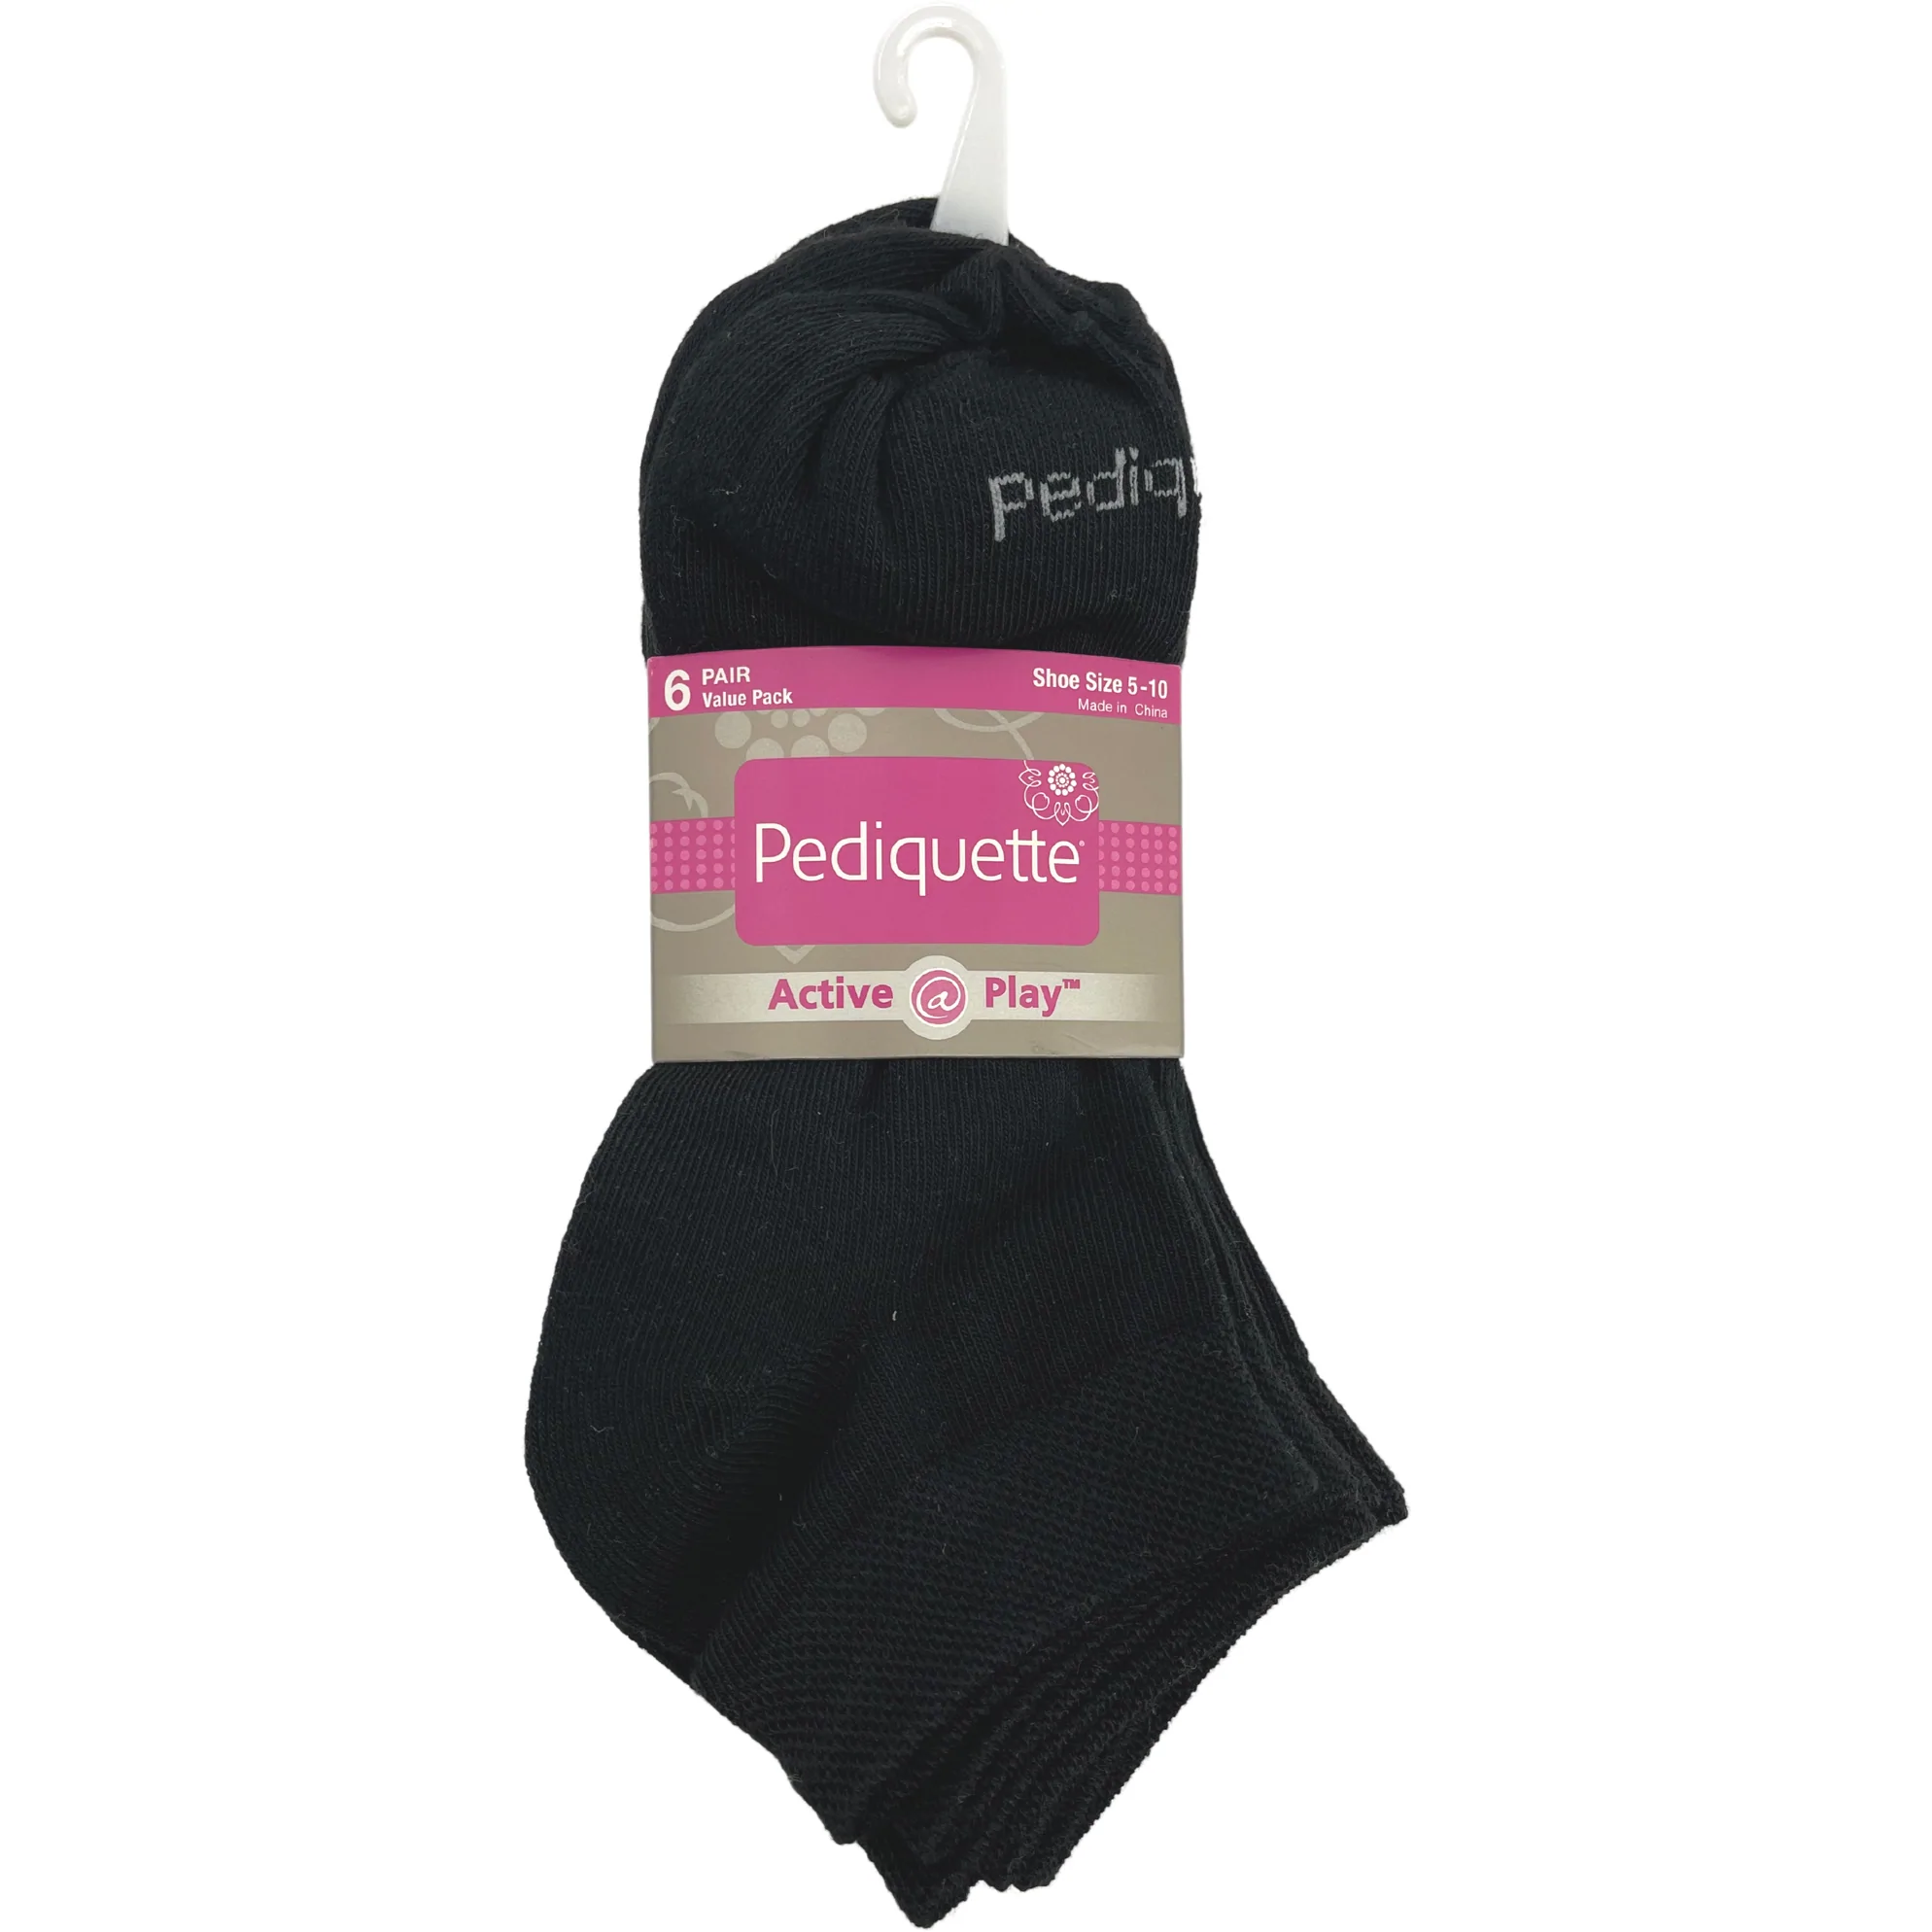 Pediquette Women's Socks / Ankle Socks / 6 Pairs / Black / Shoe Size 5-10